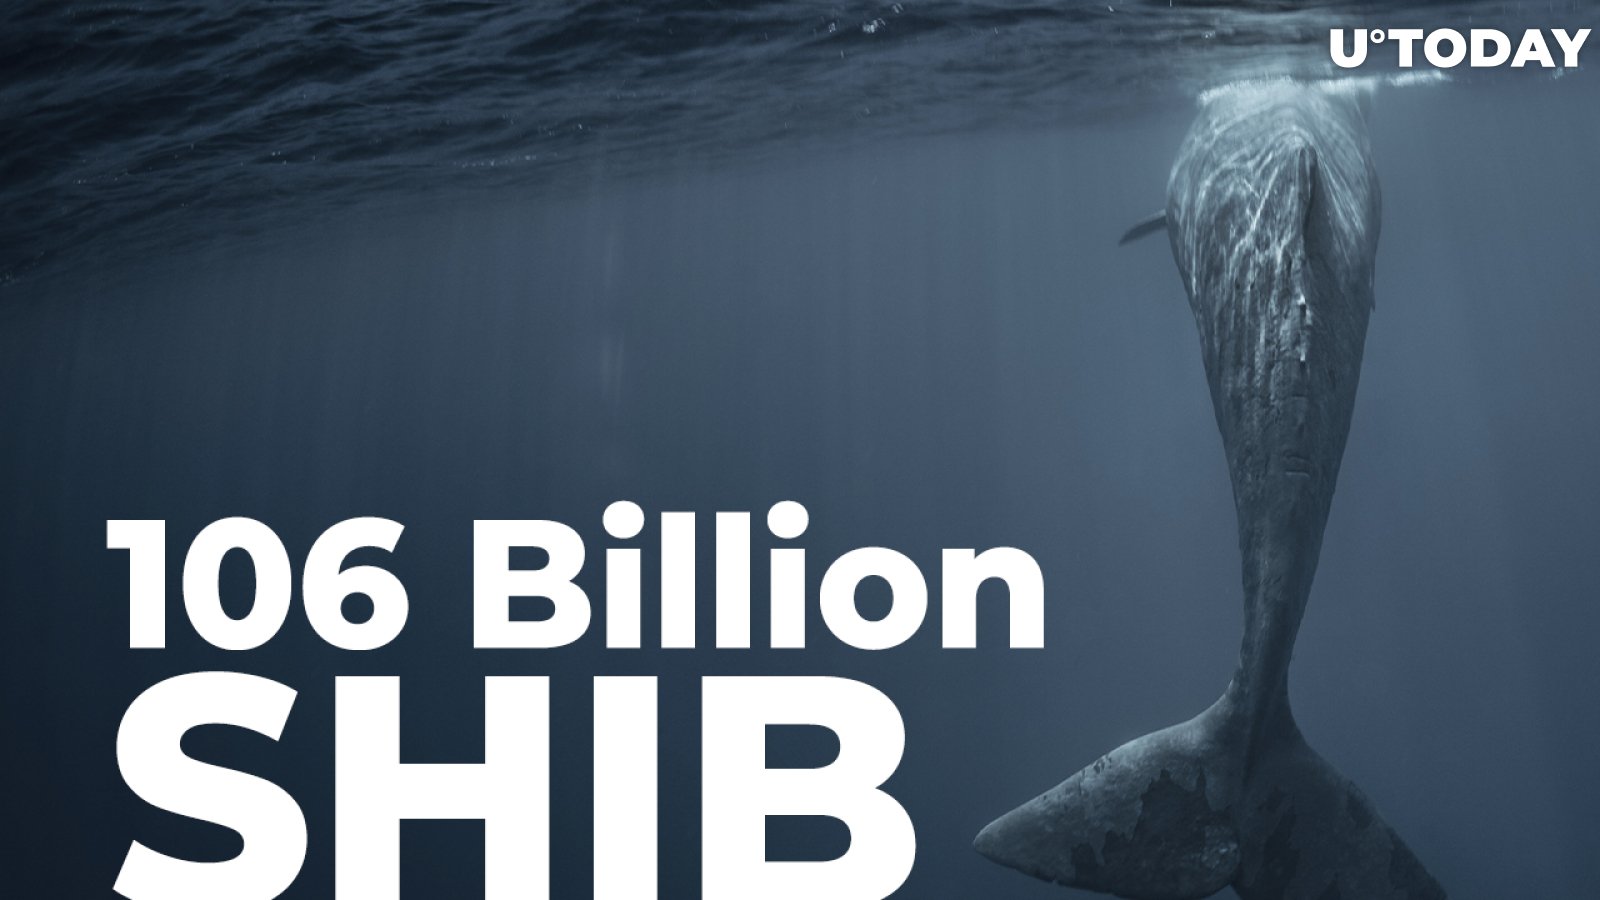 Two ETH Whales Buy 106 Billion SHIB Amid Token Price Decline